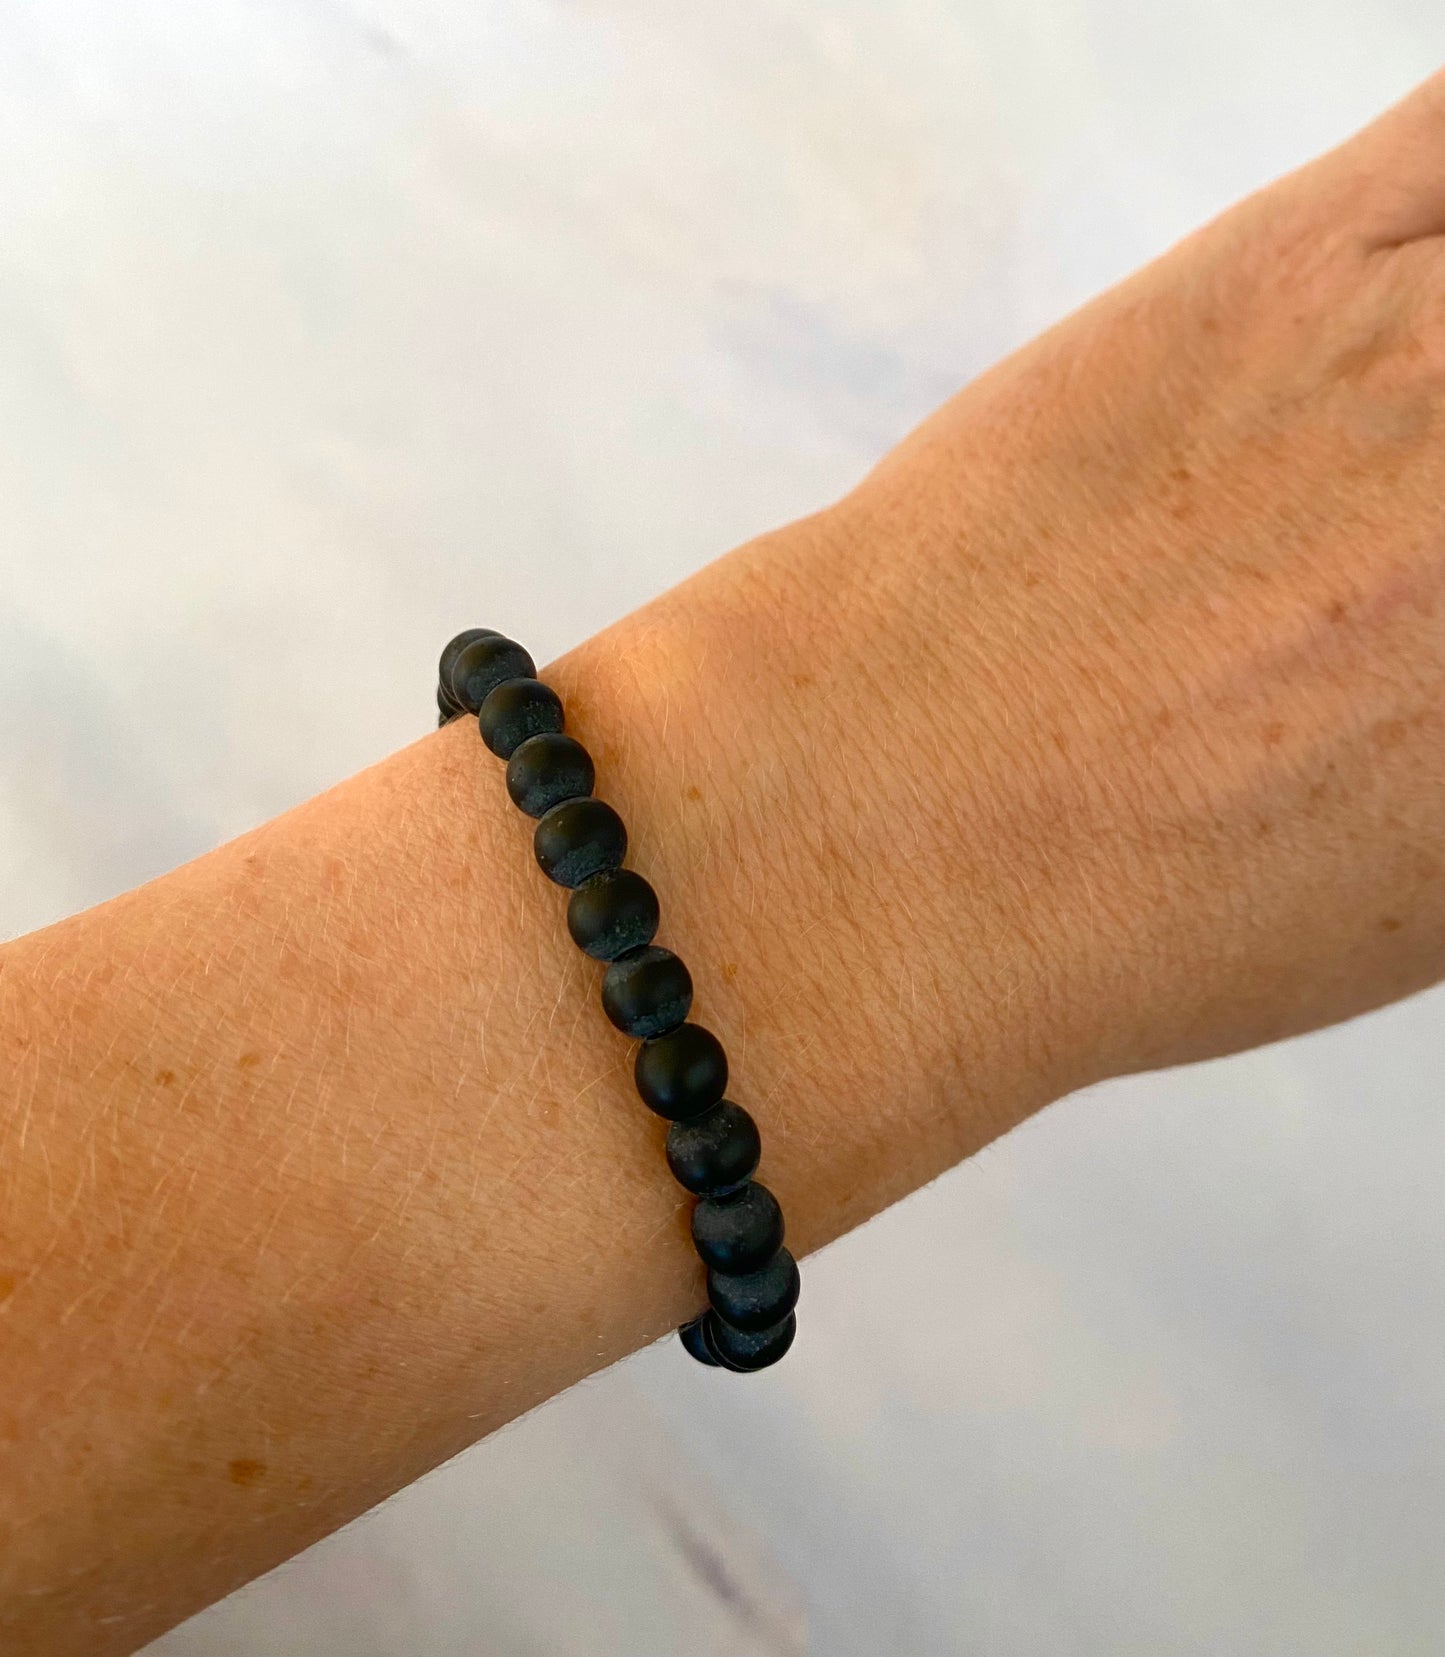 Arabic 'strength' bracelet